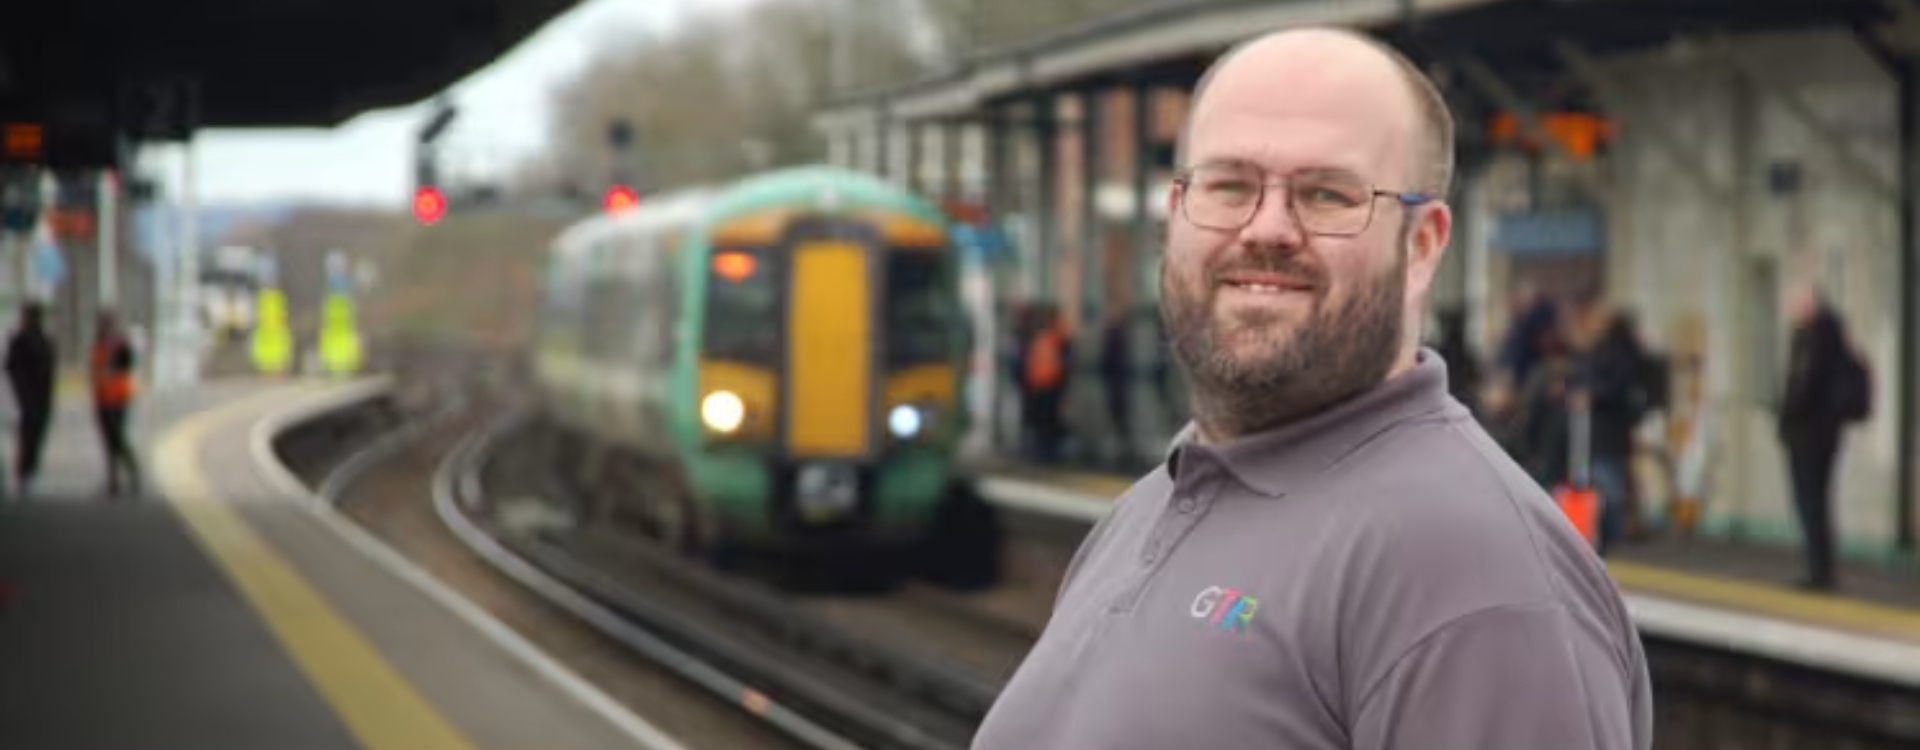 Train fan Dave in bid to visit all 2,580 GB railway stations in just 6 weeks! Facebook LinkedIn Twitter